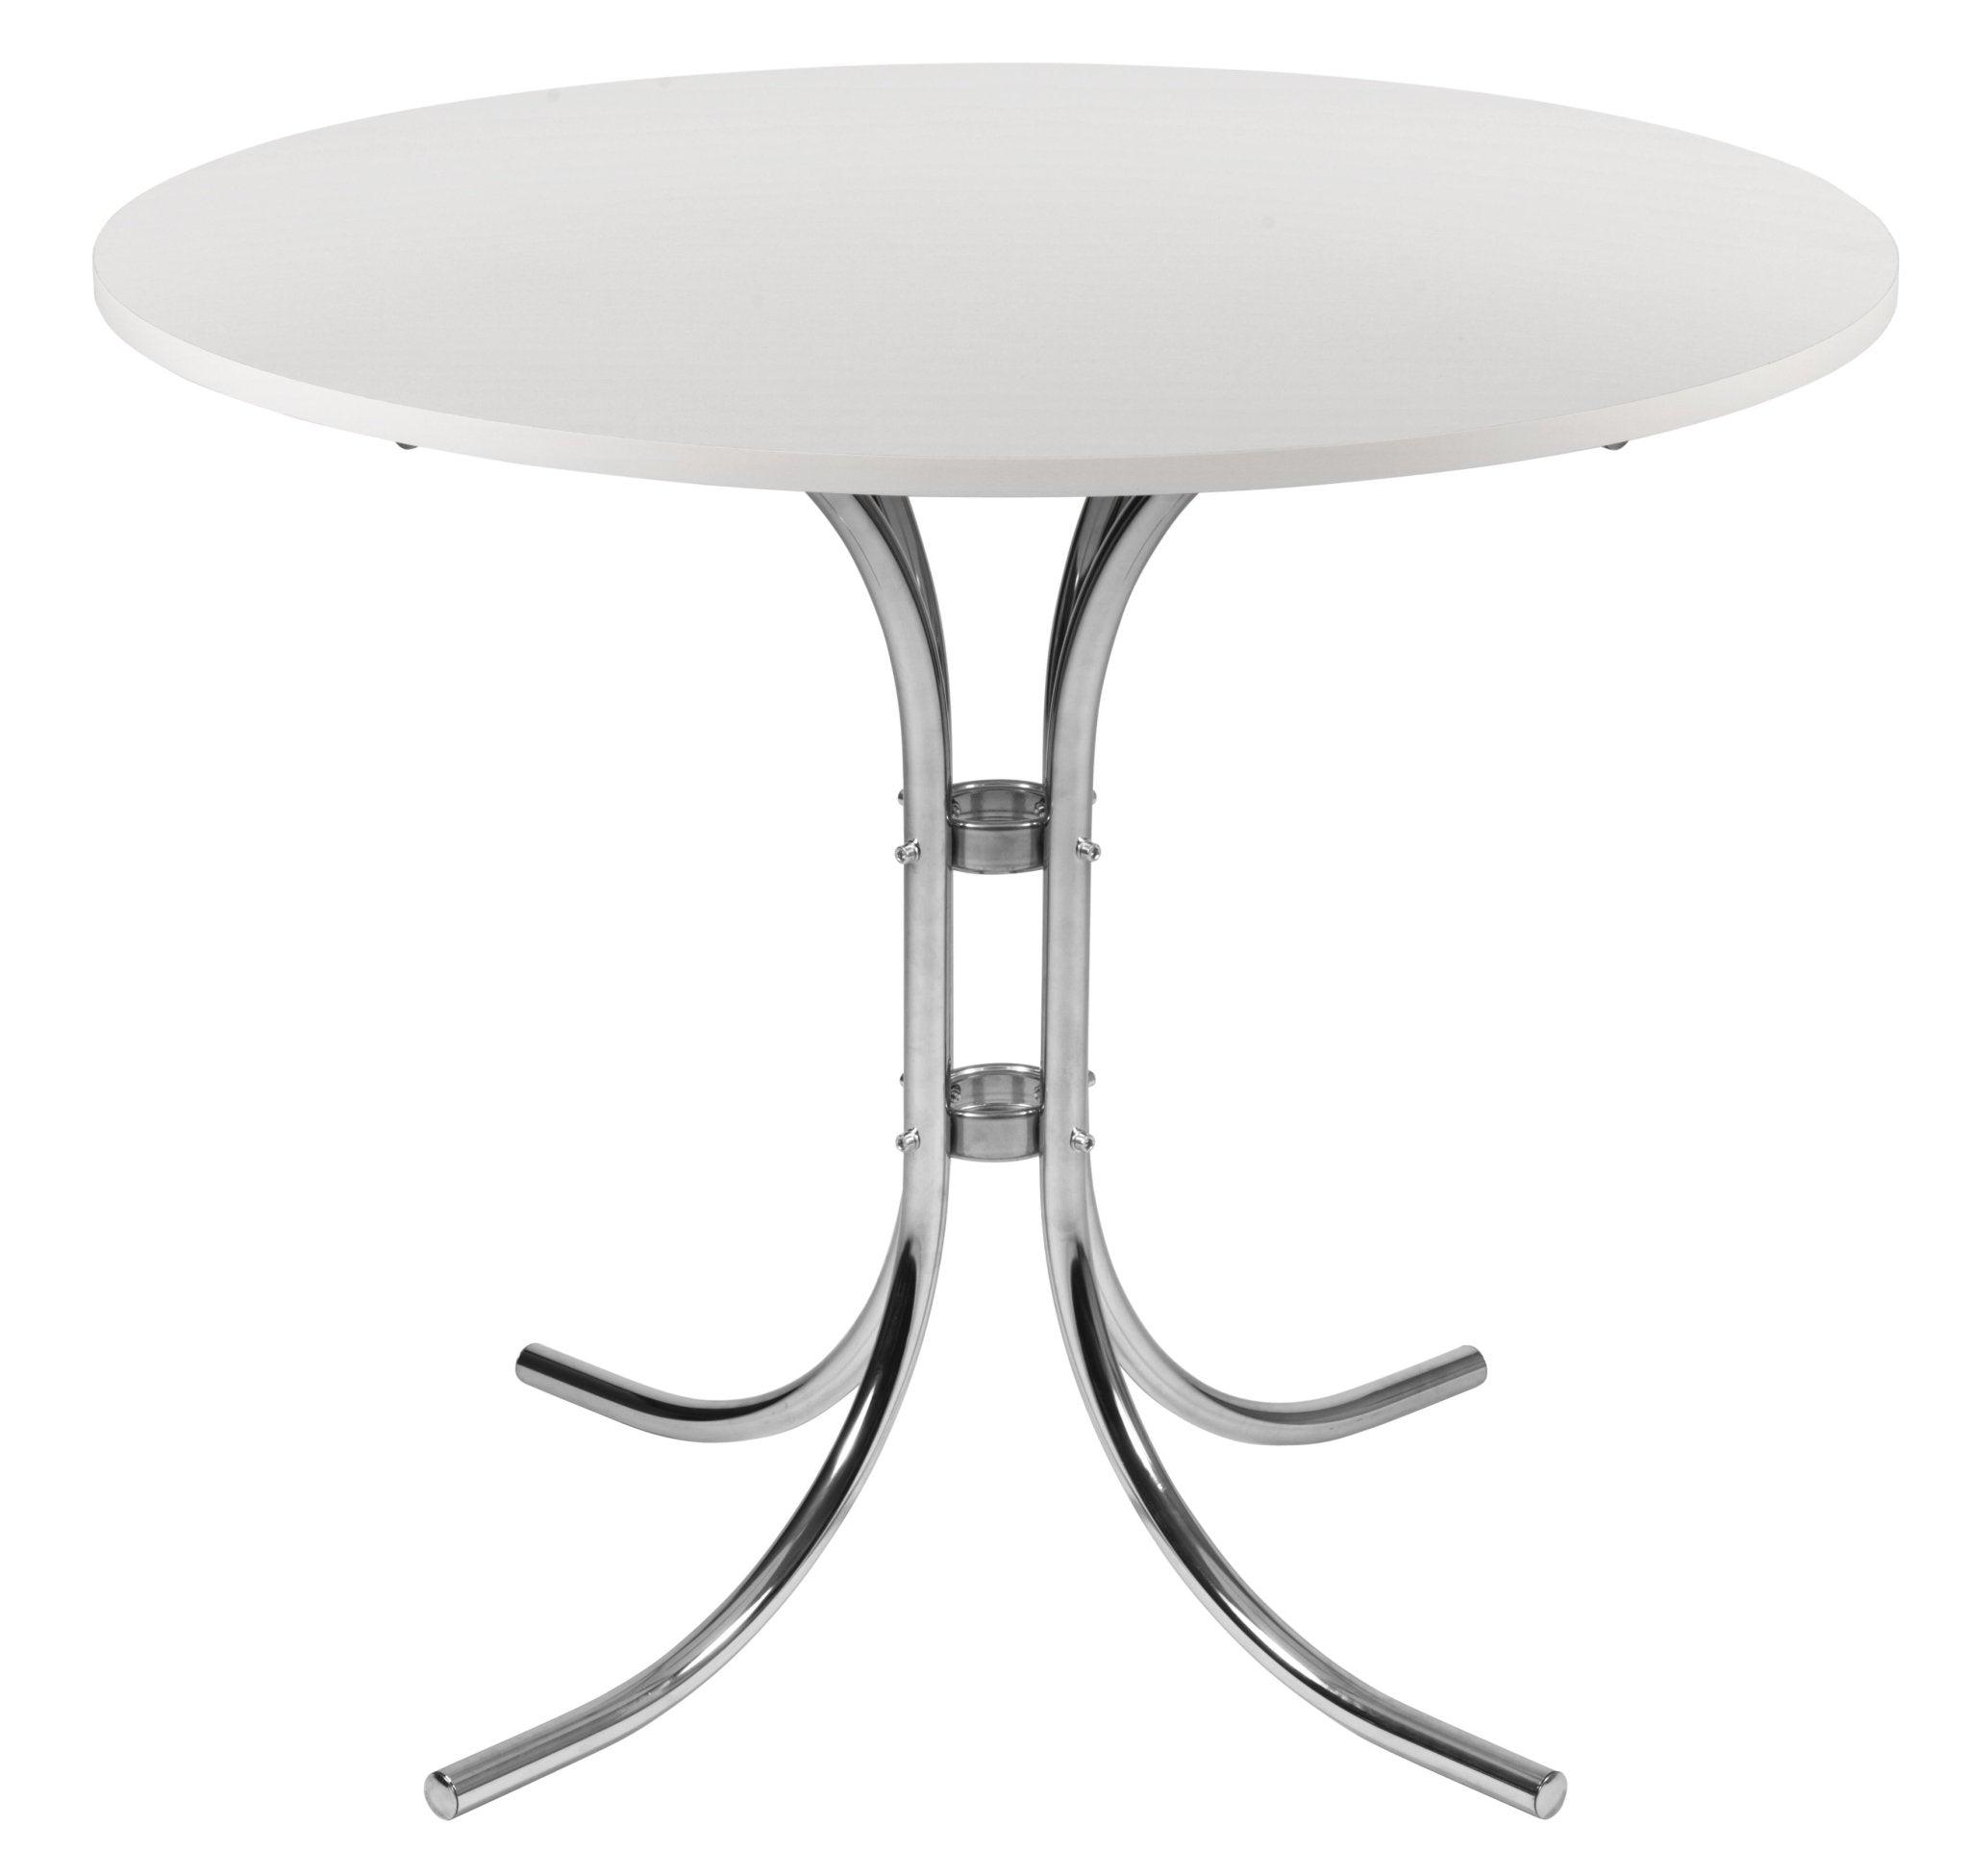 Bistro table (white) - crimblefest furniture - image 1